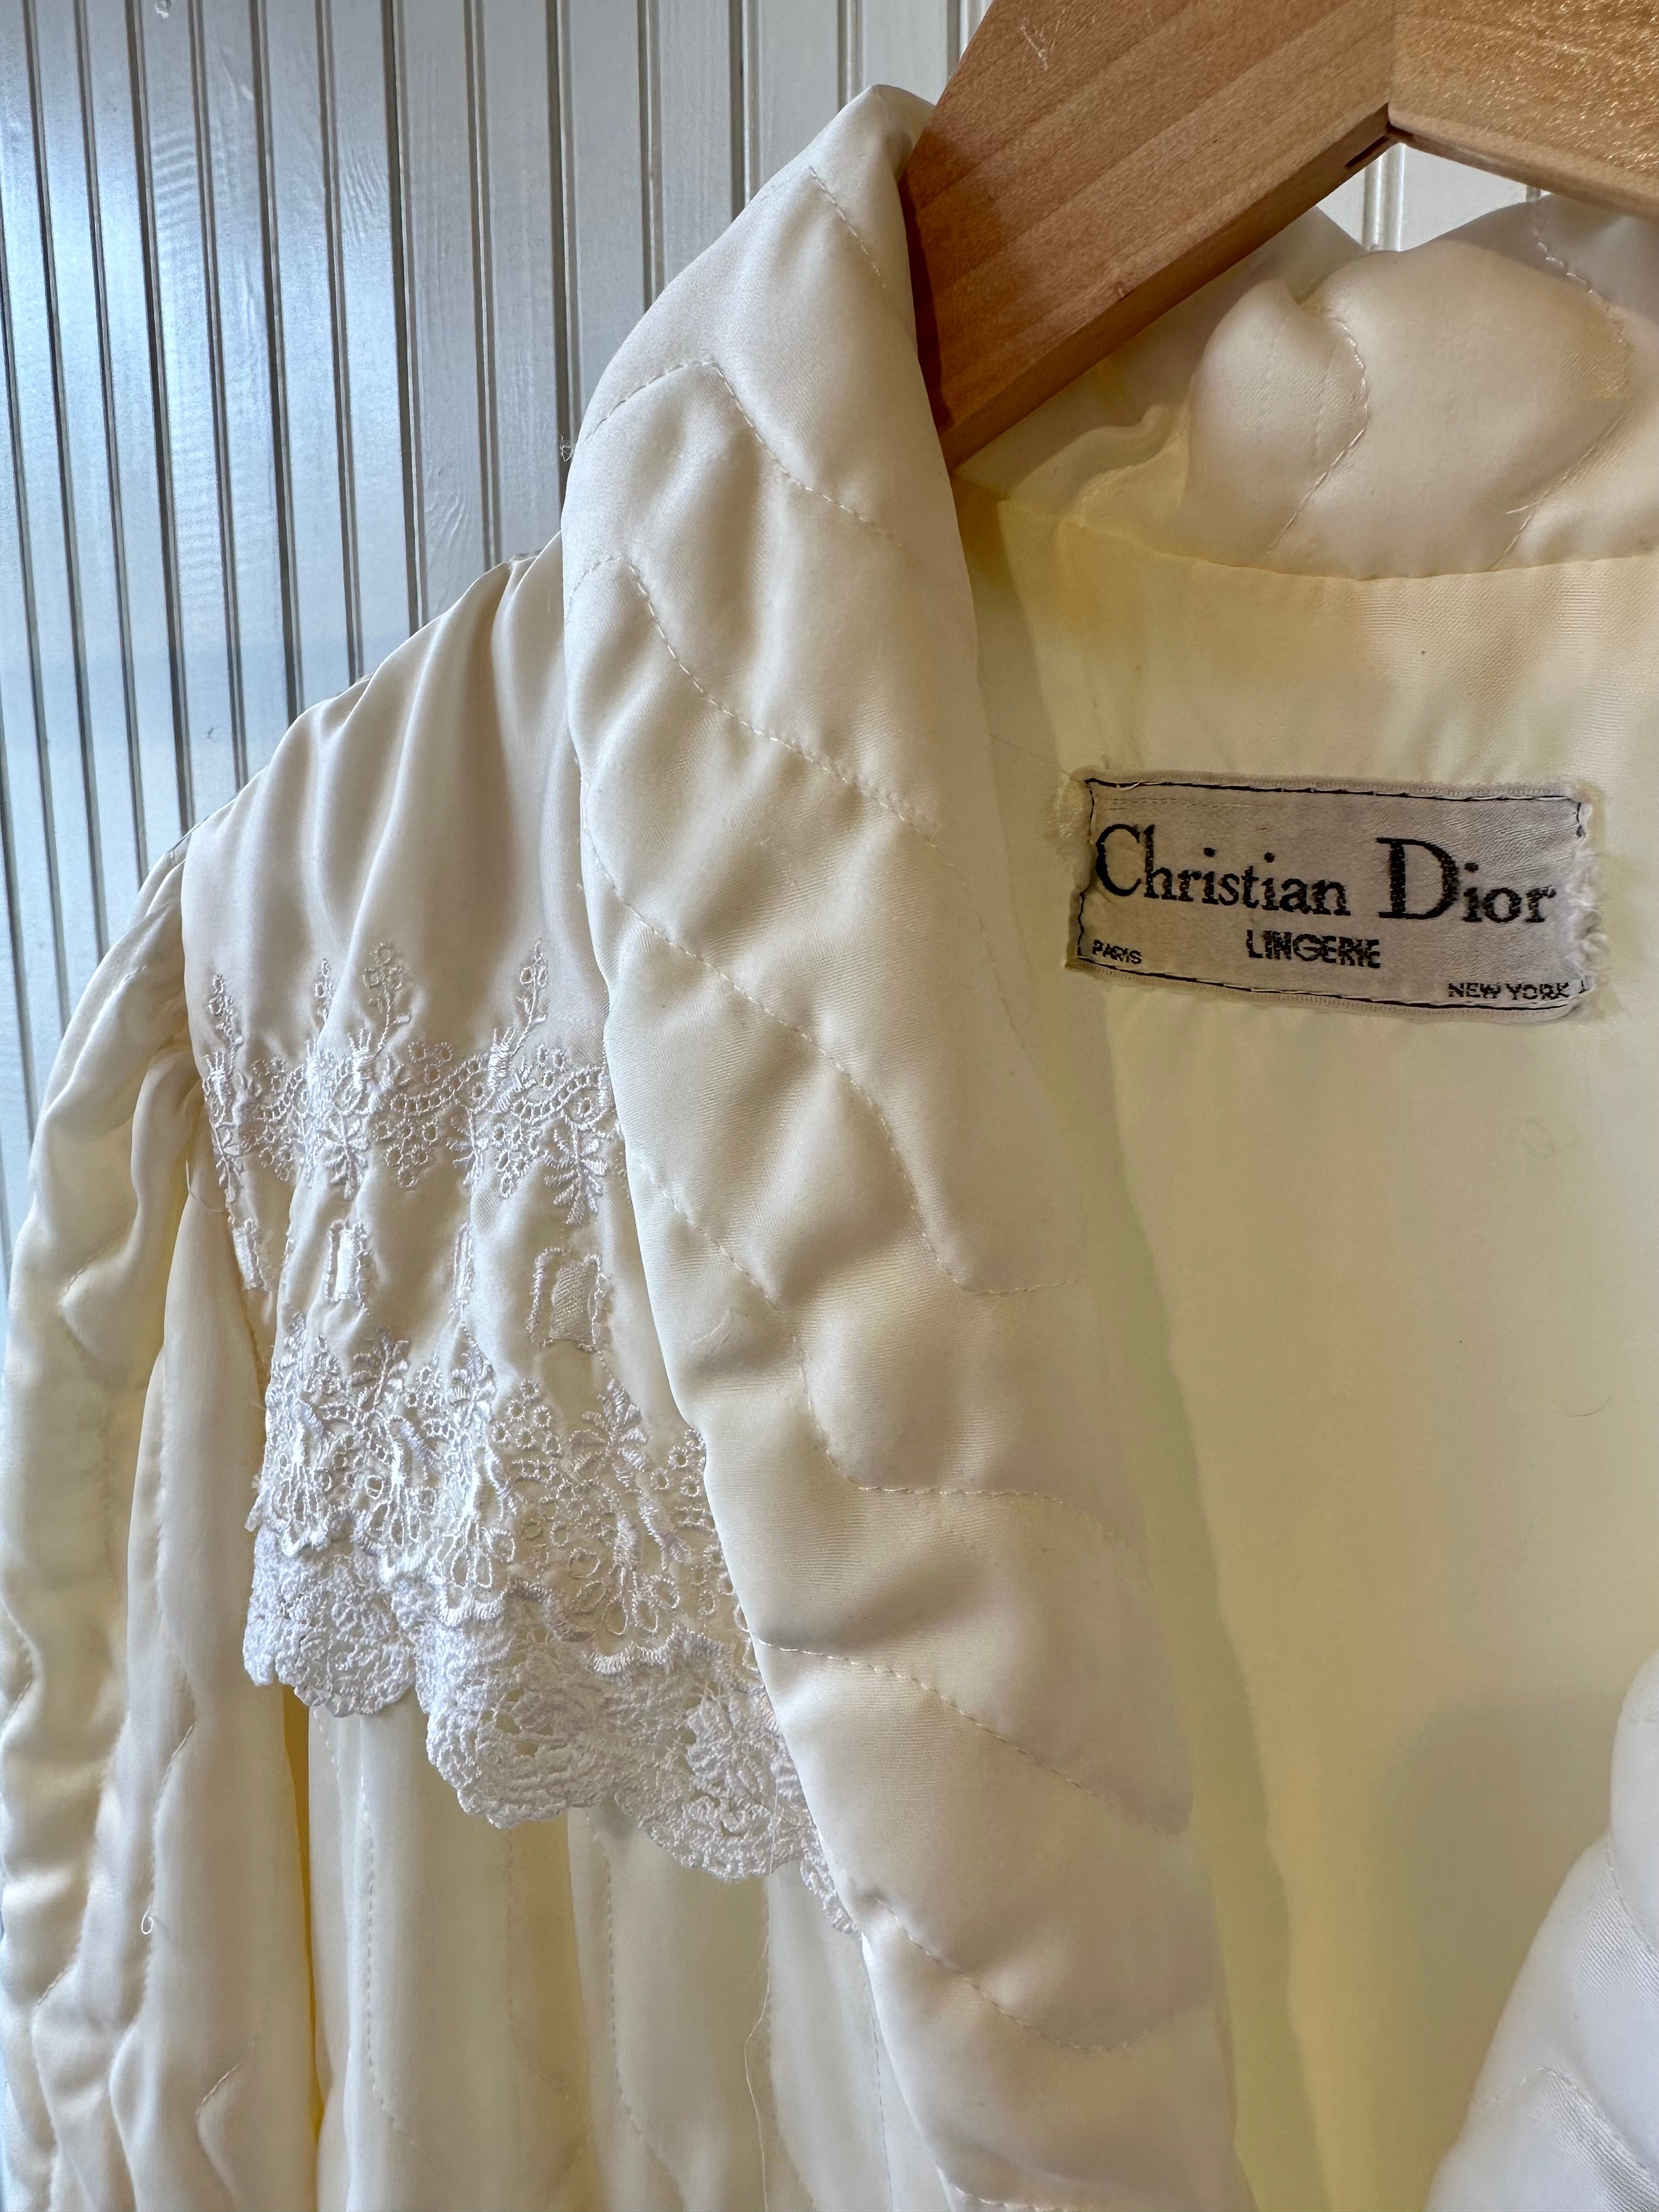 Christian Dior Lingerie Housecoat - XS Media 1 of 3